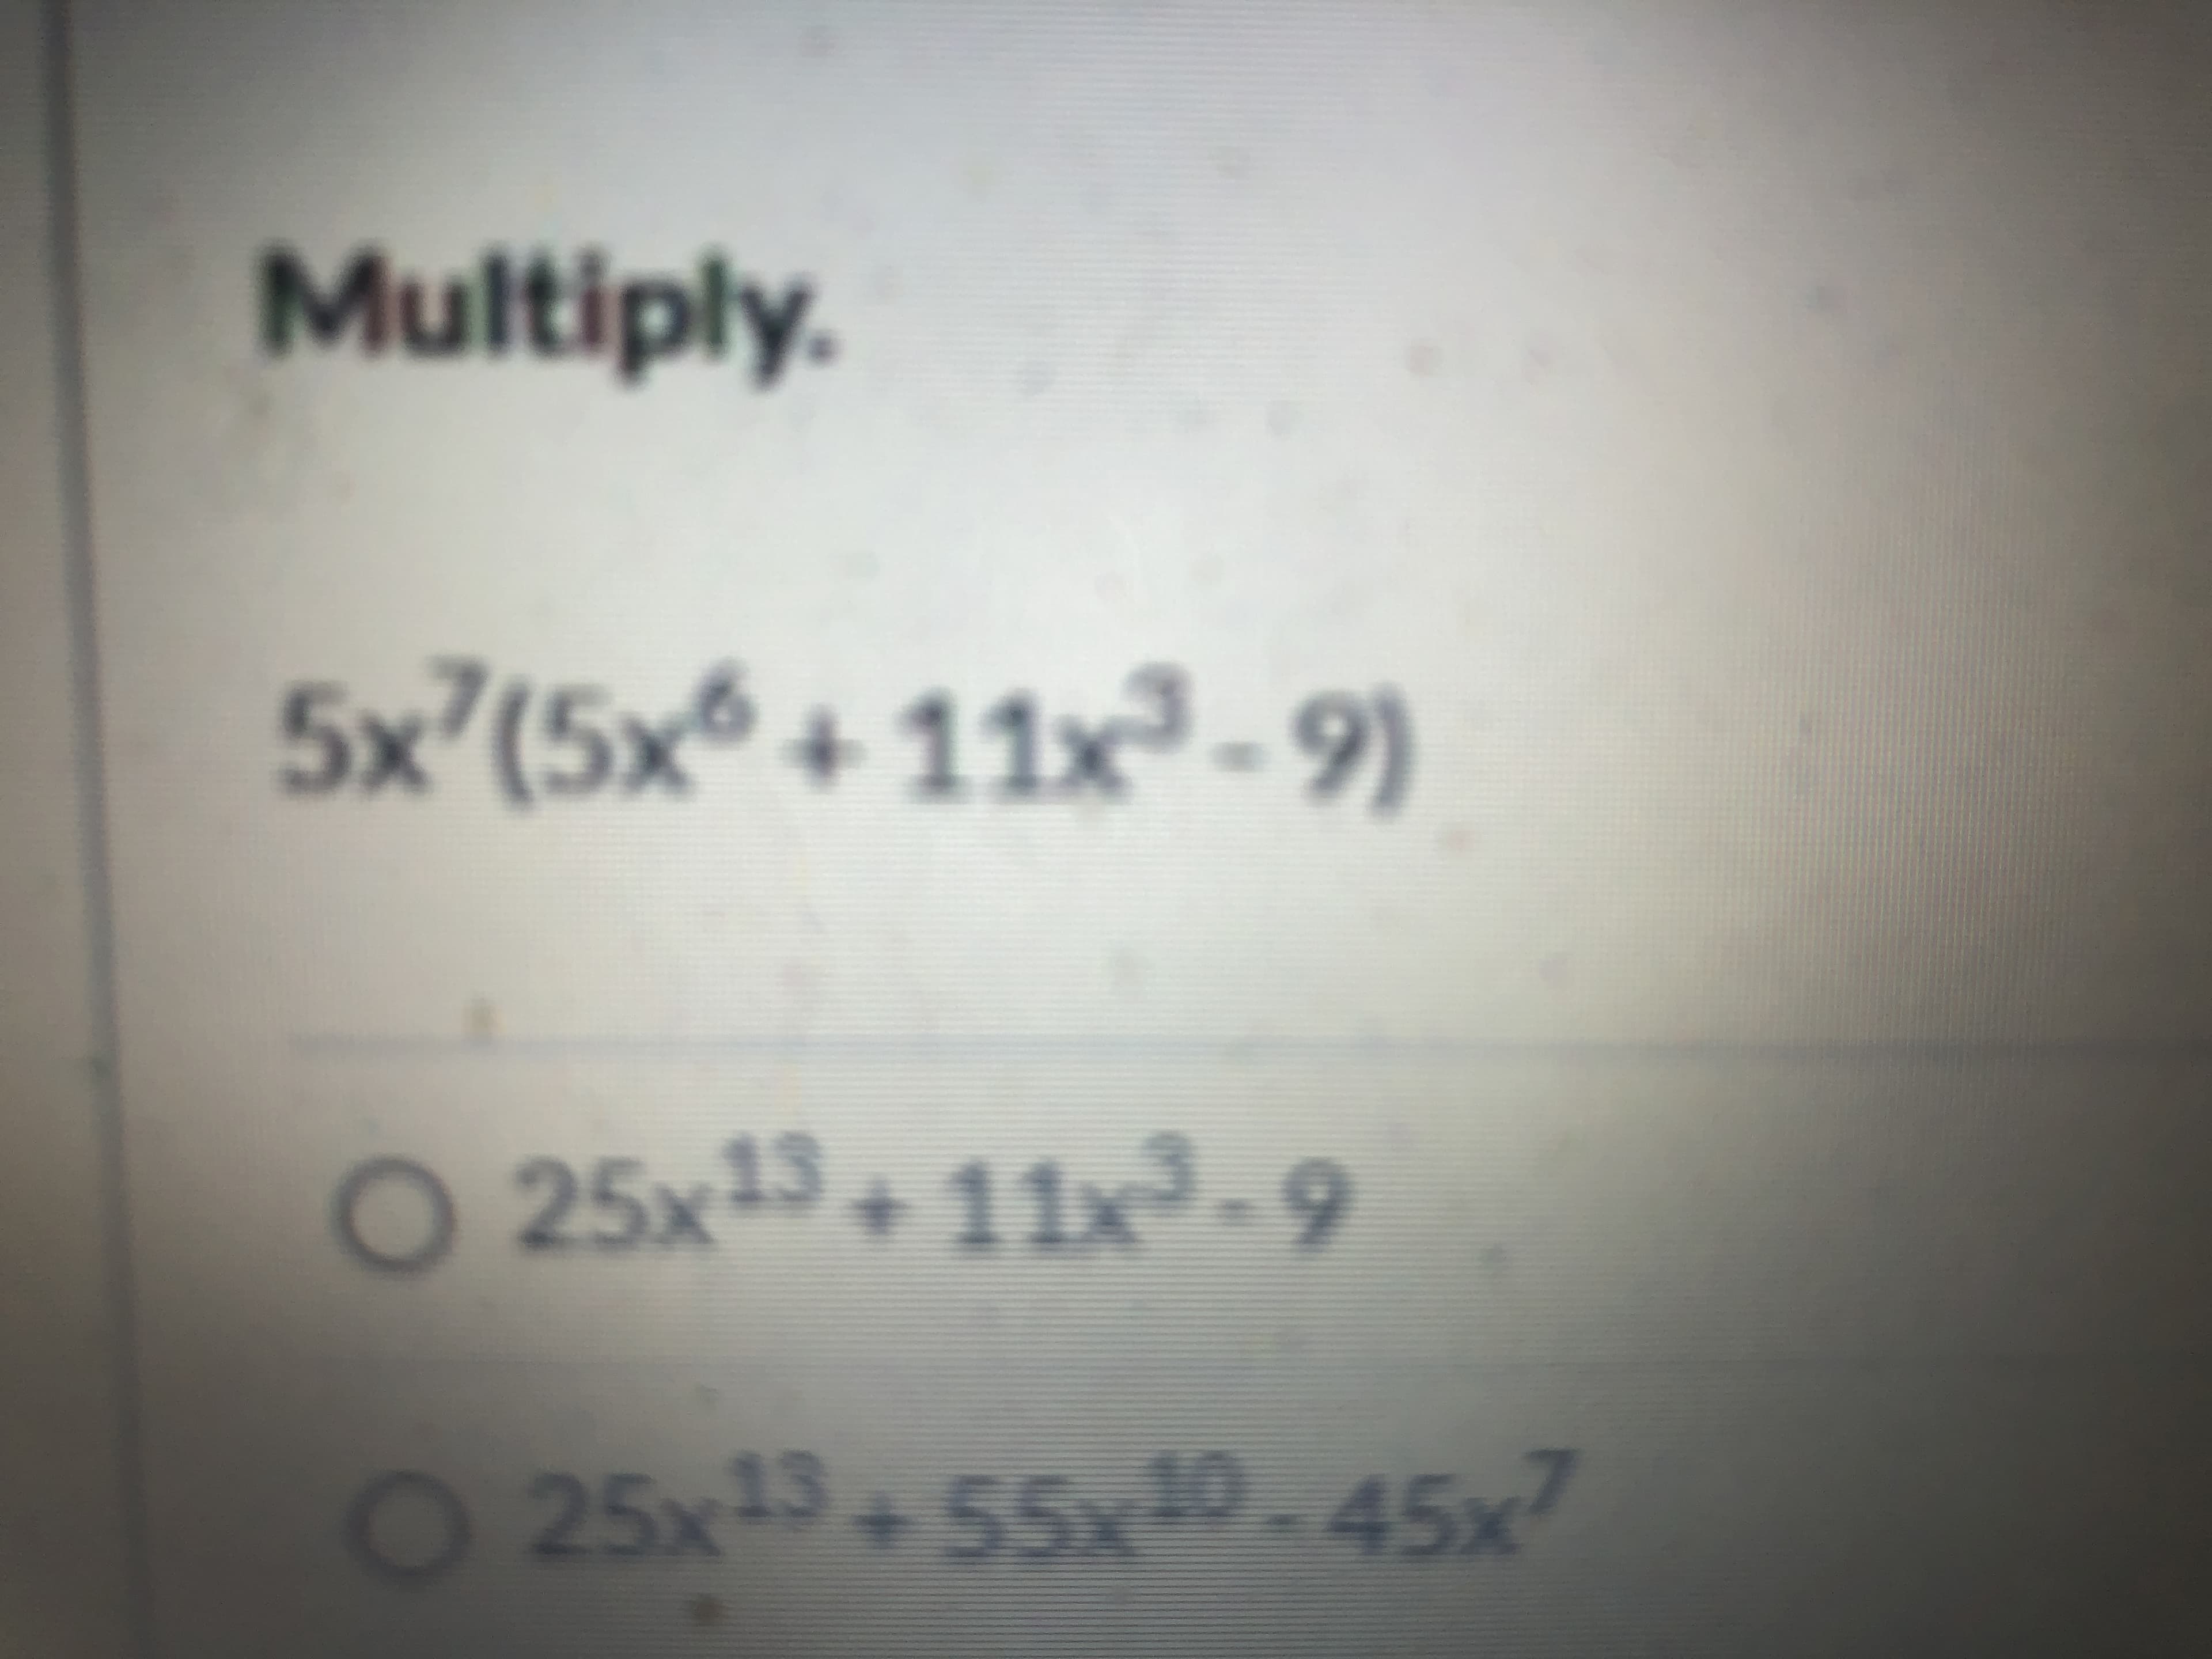 Multiply
5x'(5x° + 11x²-9)
O 25x13+ 11x²-
O 25x13+55x10.45x7
